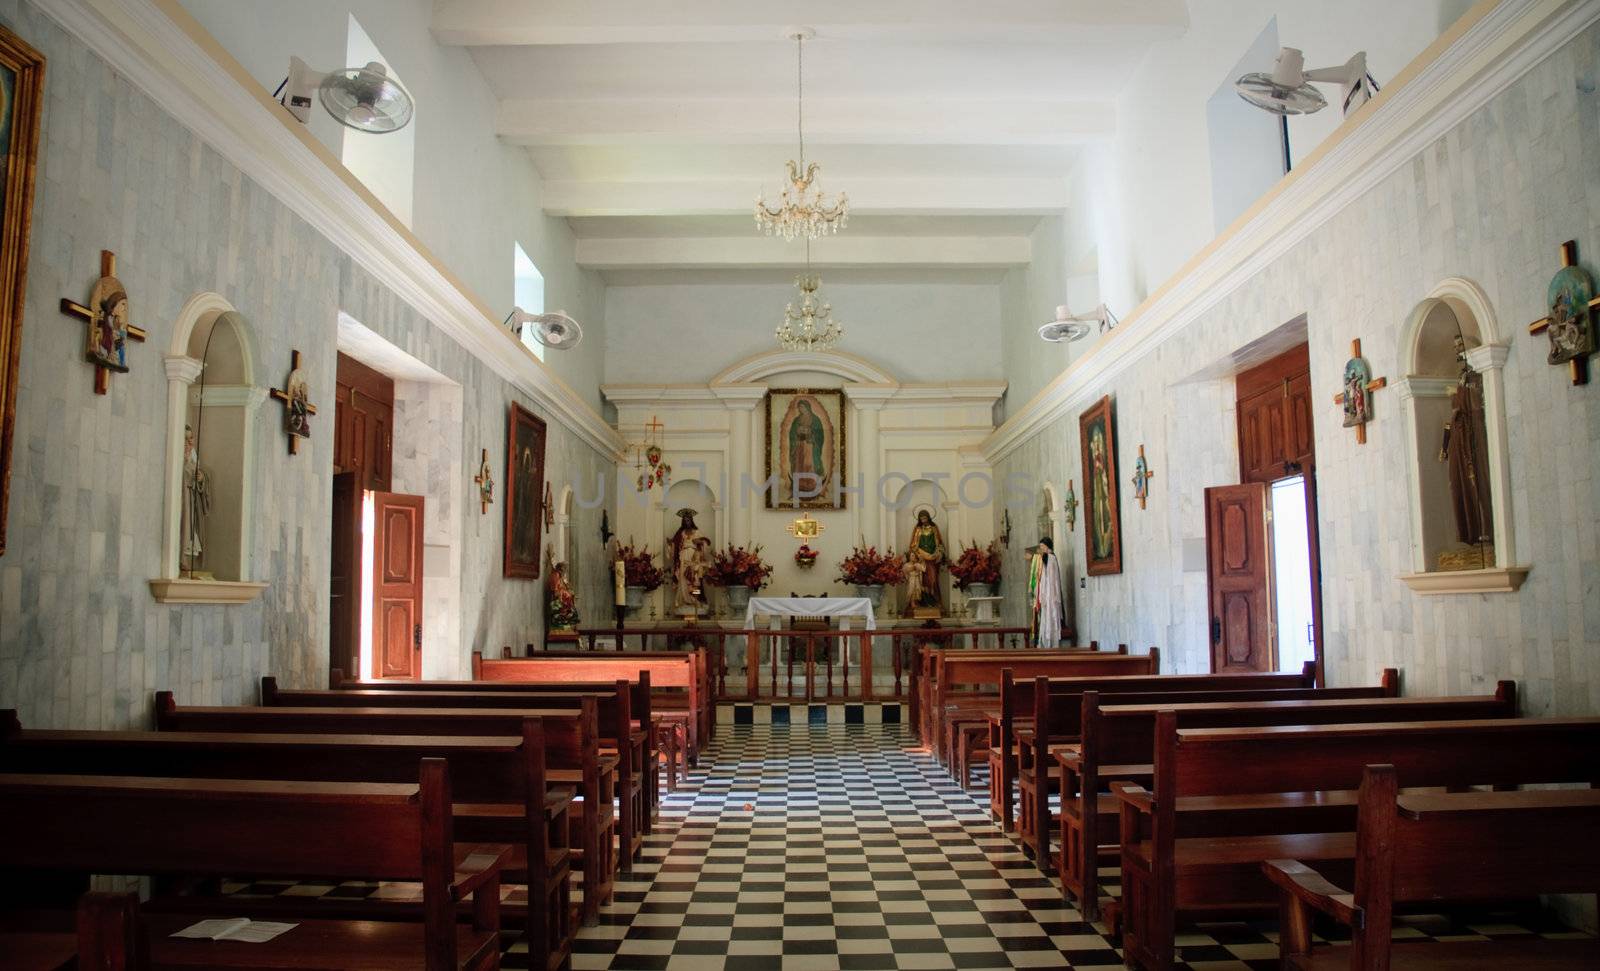 Interior of El Quelite Church in Mexico by steheap